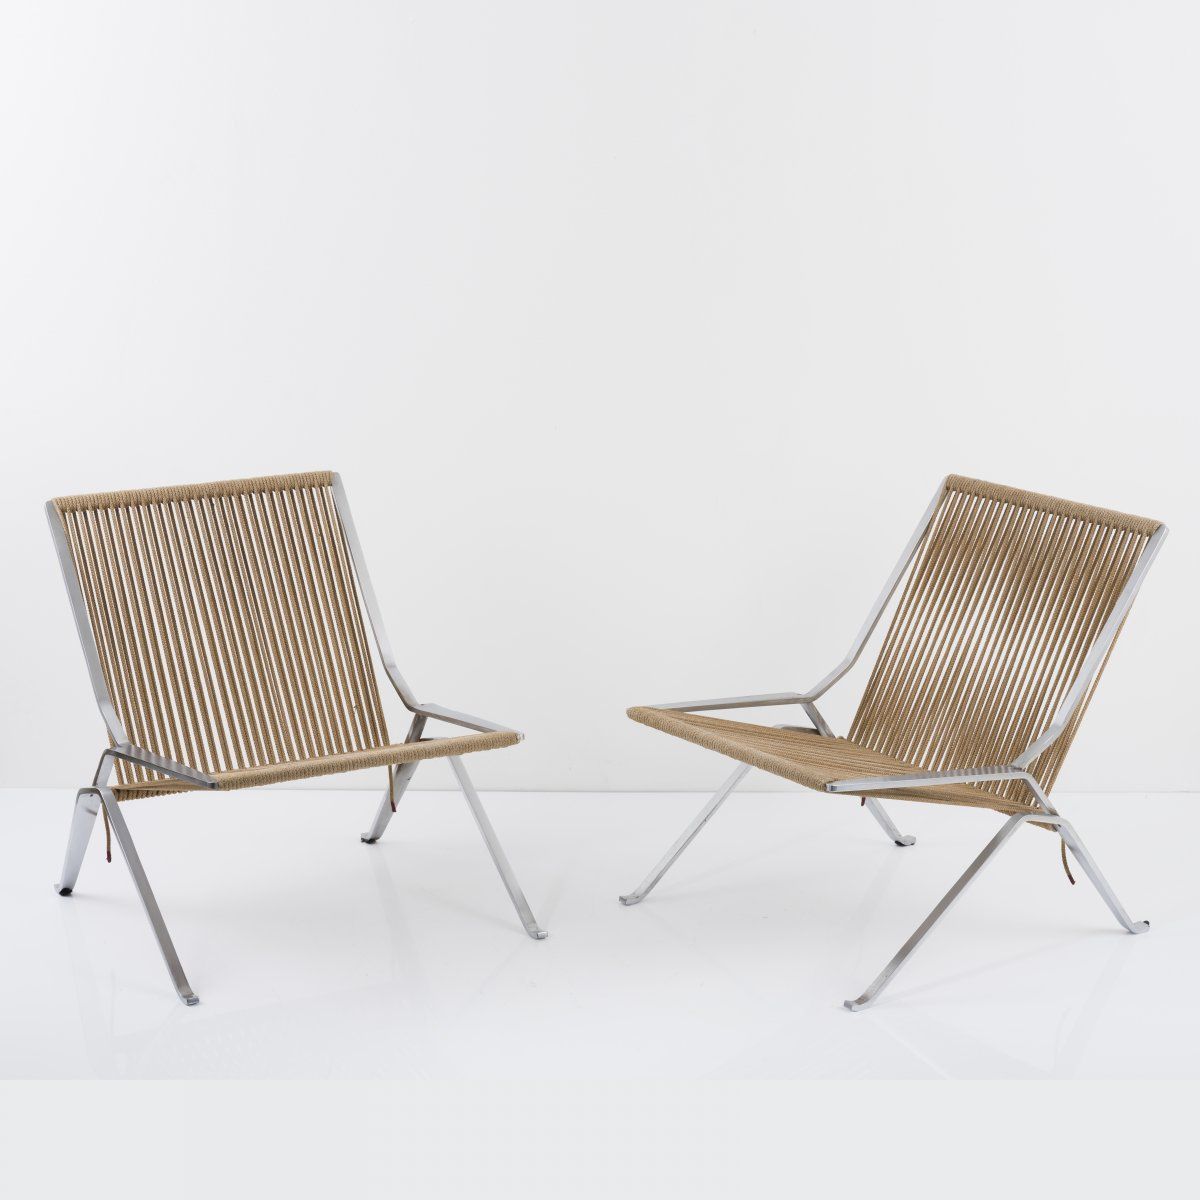 Null Poul Kjaerholm, 2 'PK 25' - 'Element chairs', 1952, H. 73 x 68.5 x 75 cm. M&hellip;